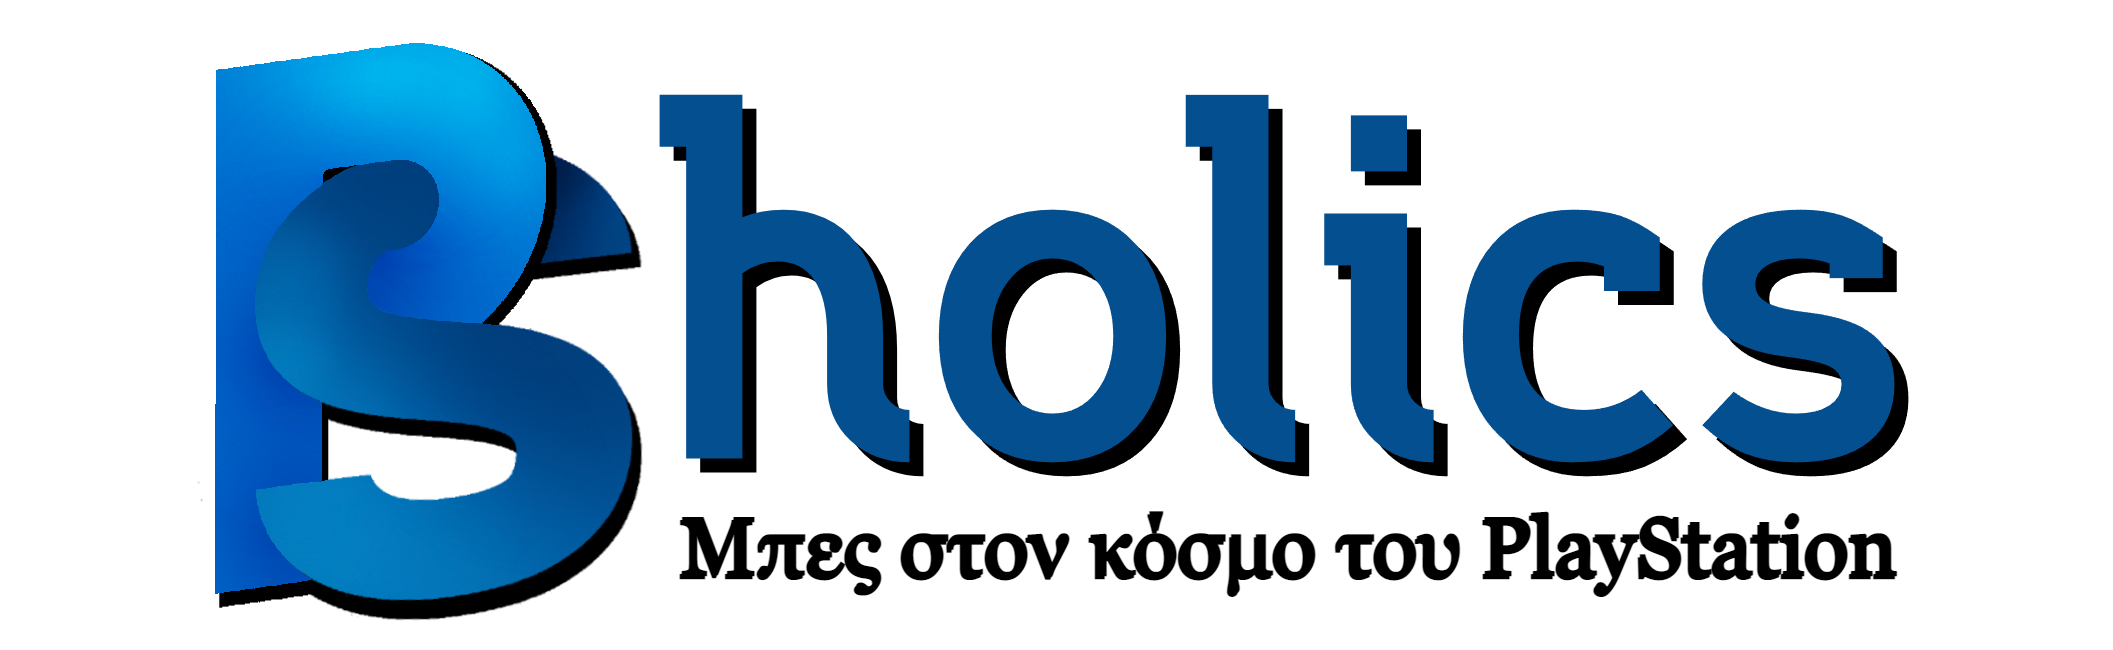 PSholics Full Logo Website